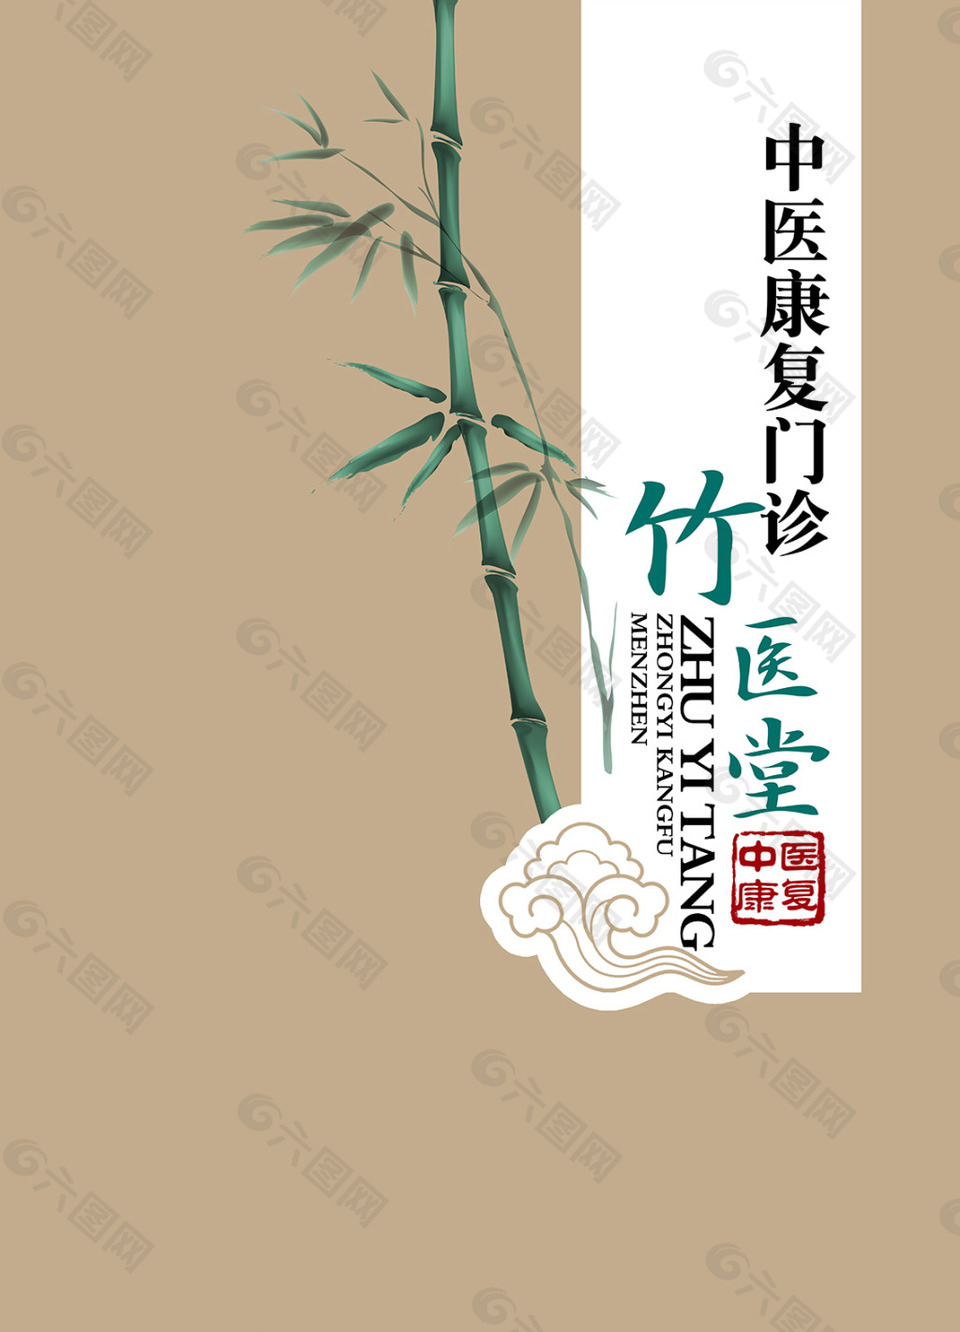 竹医堂logo